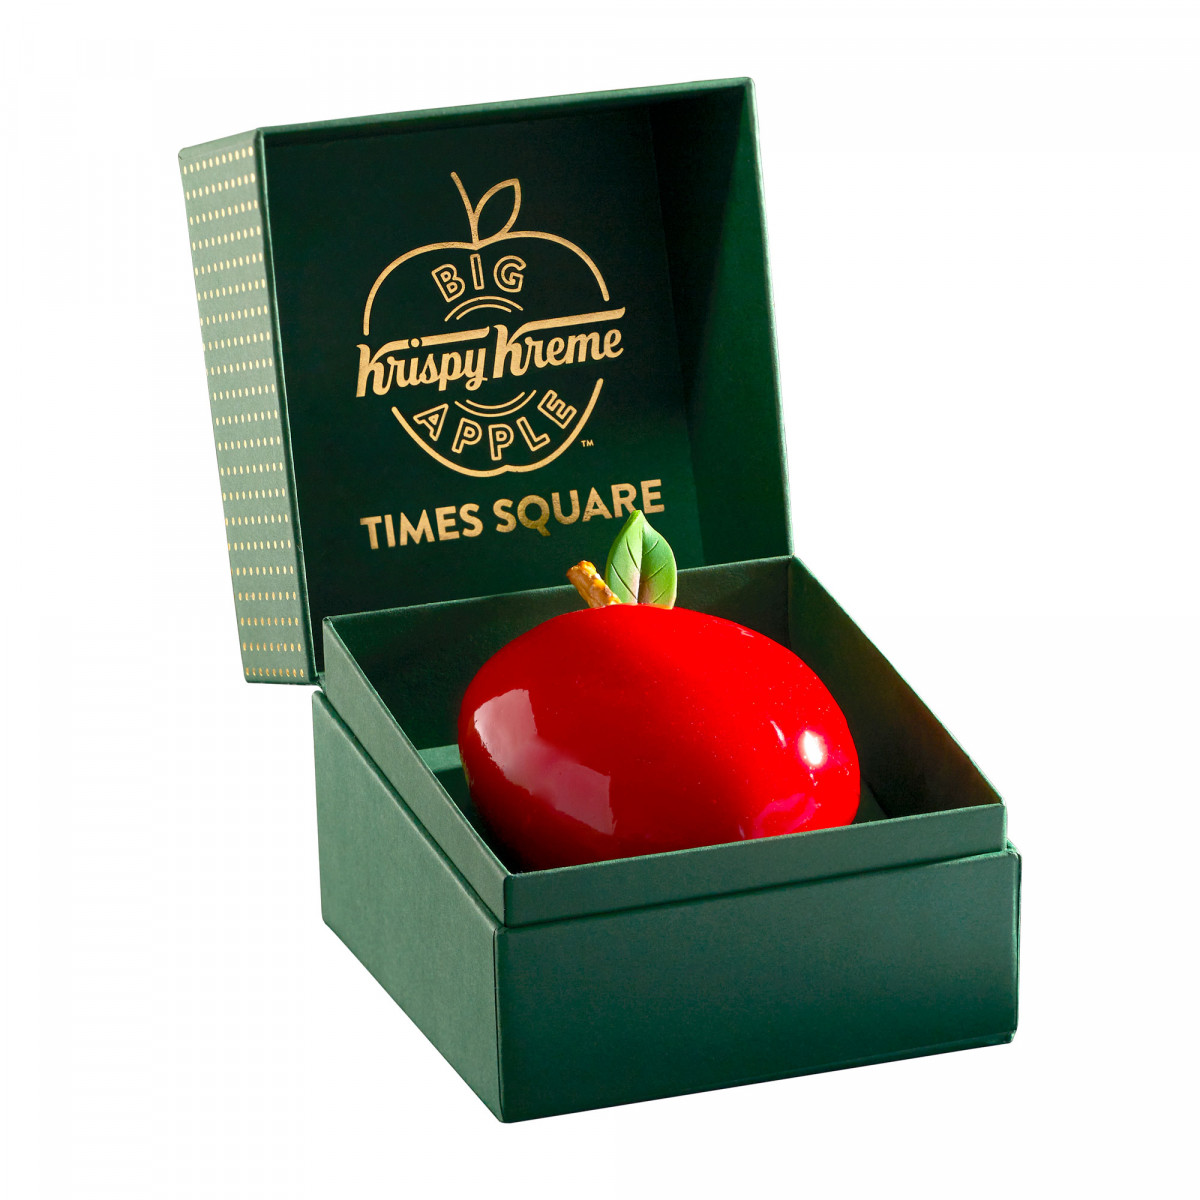 Food product photography of Krispy Kreme Big Apple doughnut in green presentation box